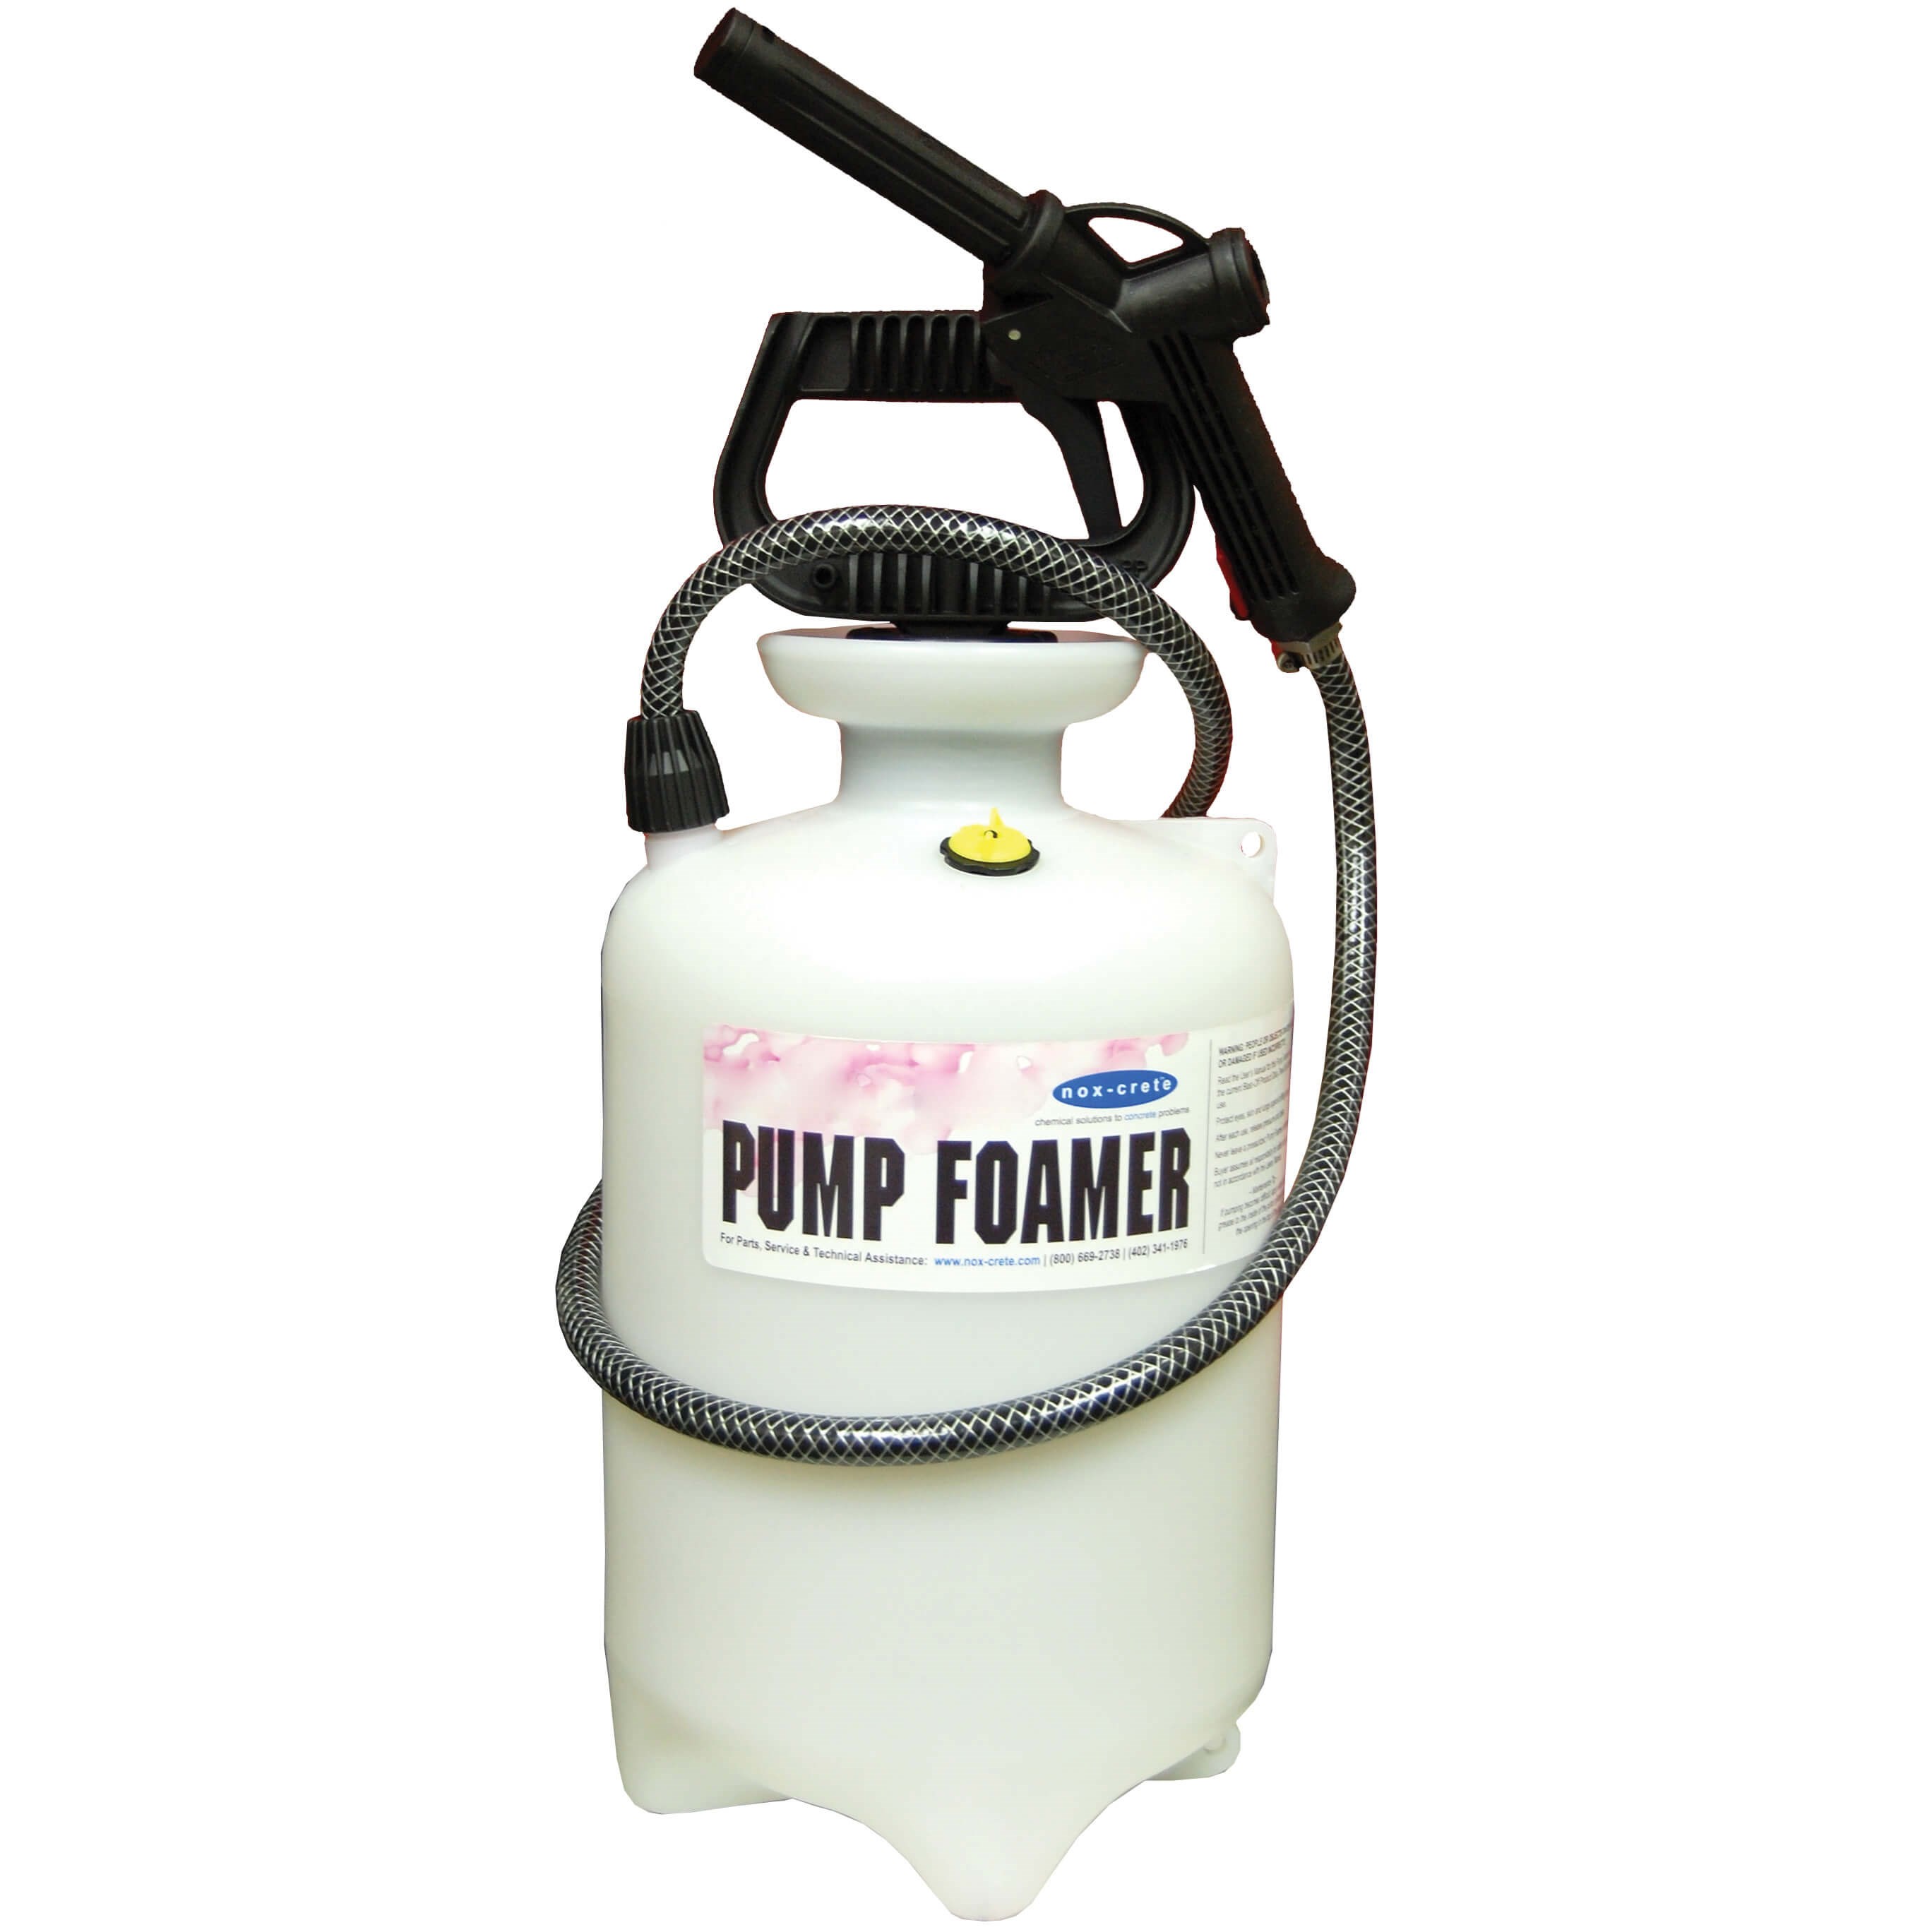 Pump Foamer